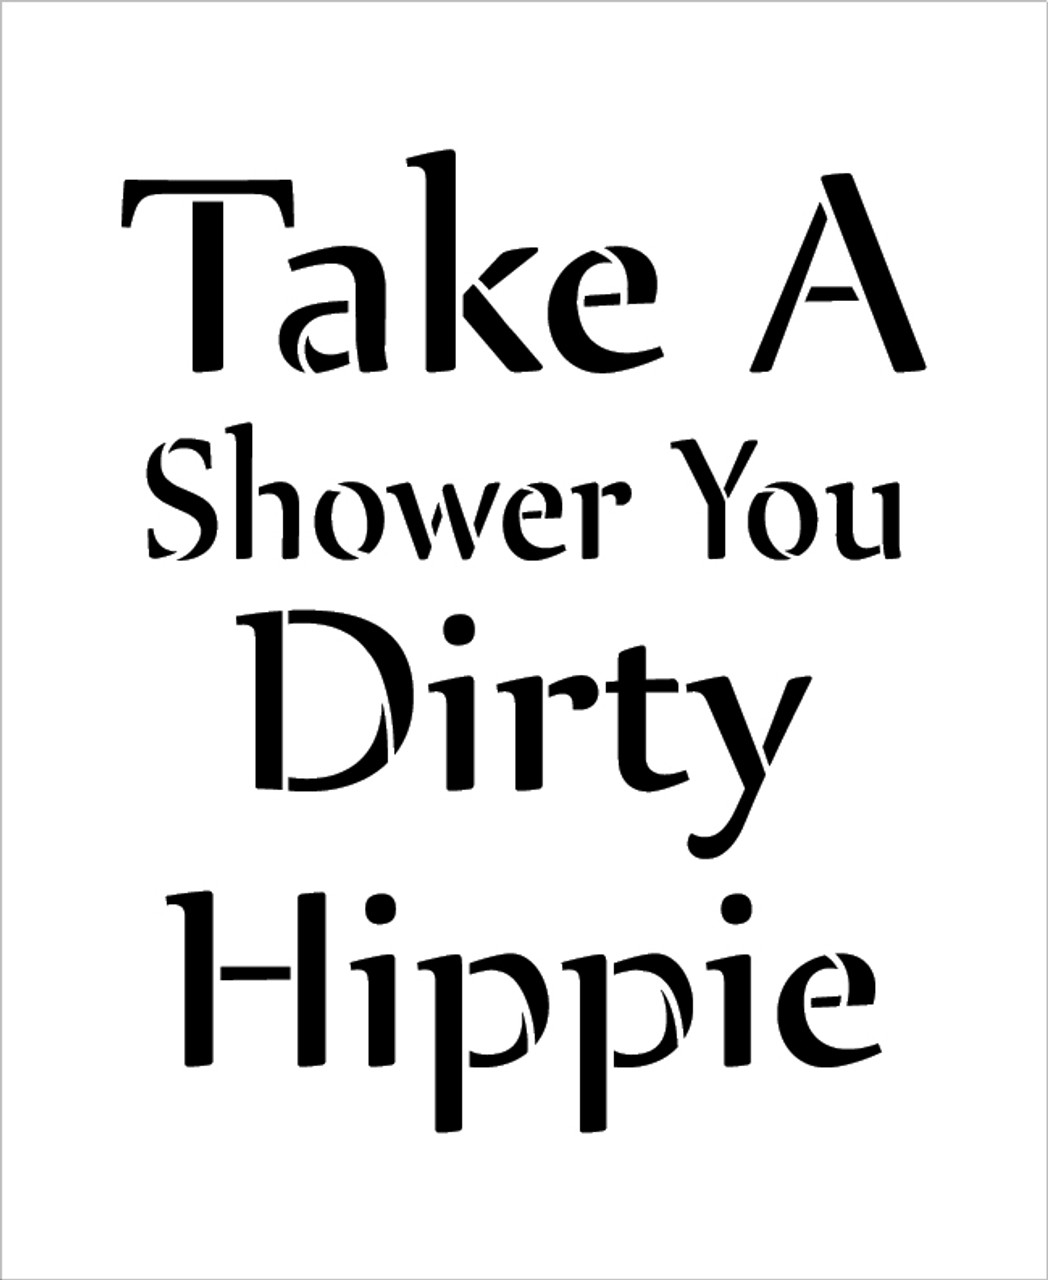 Take a Shower You Hippie - Word Stencil - 12" x 14" - STCL2075_2 - by StudioR12